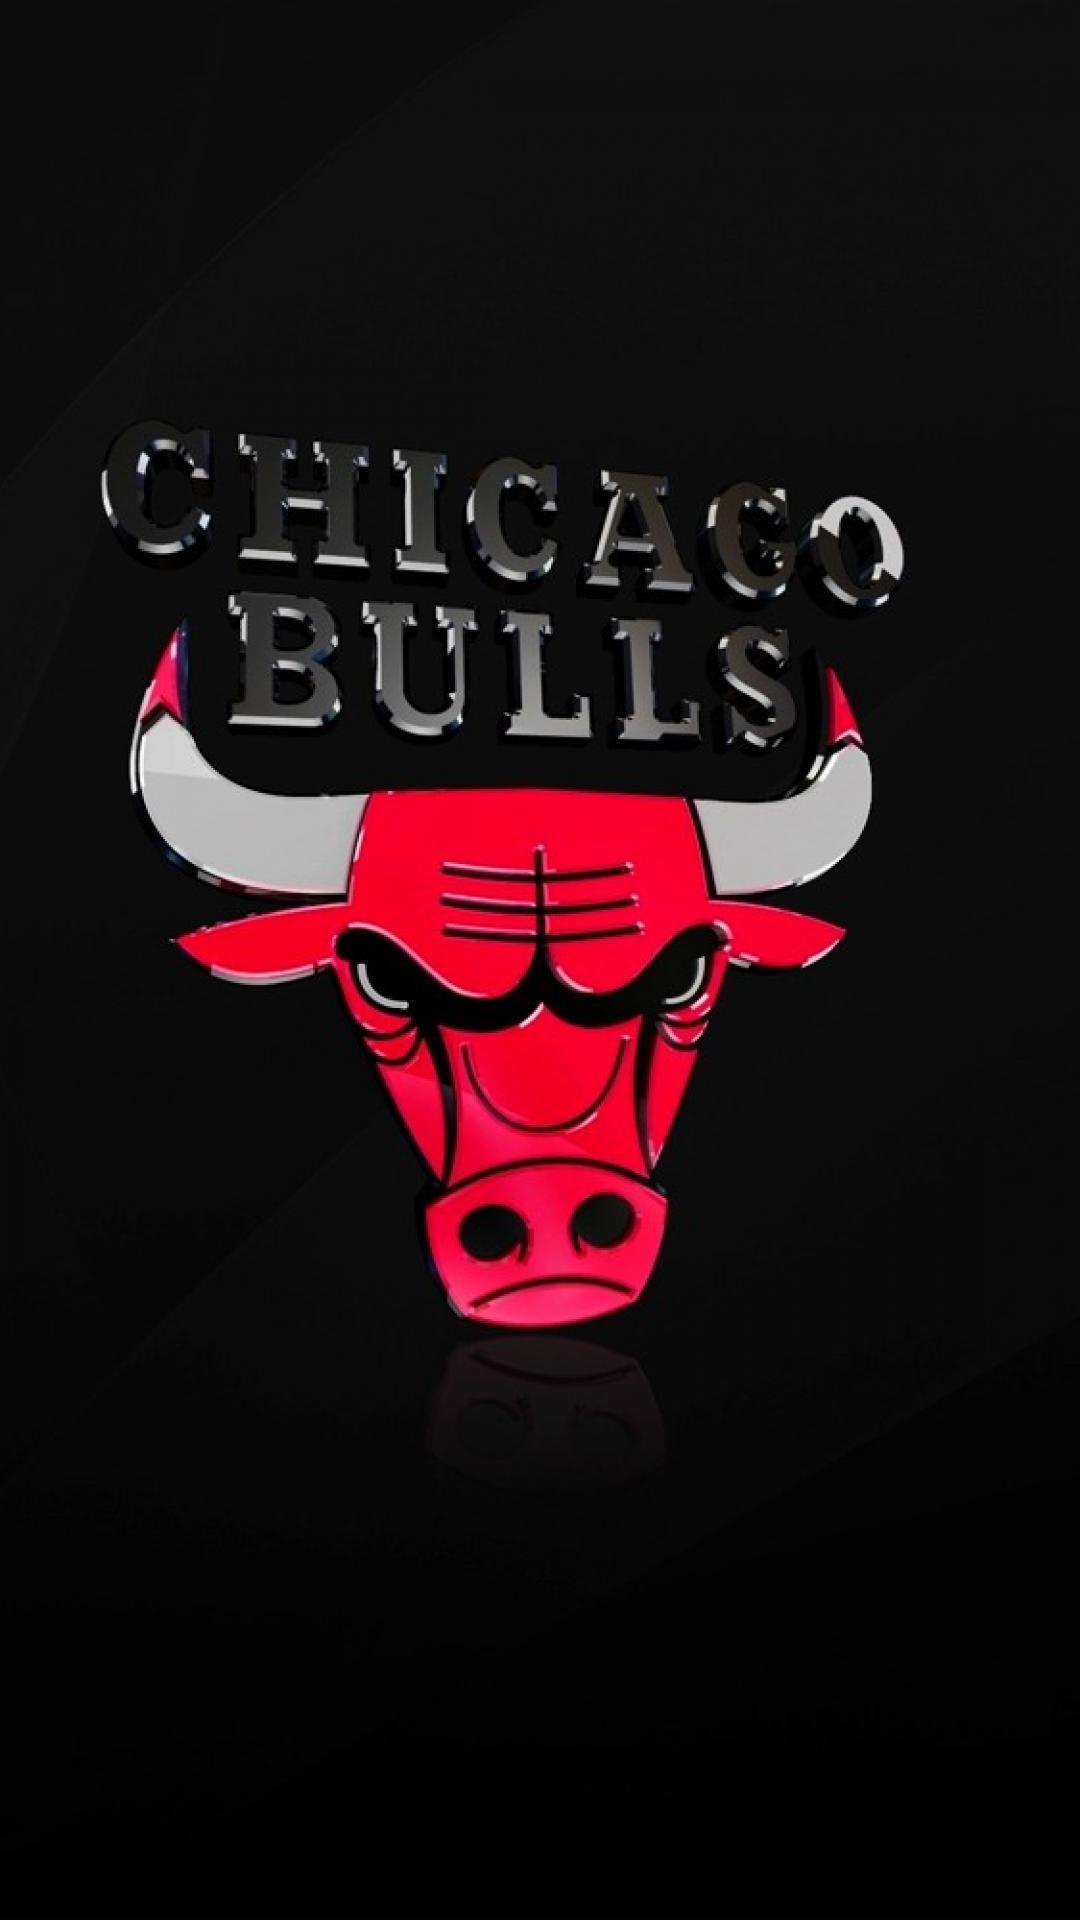 Chicago bulls logo wallpaper